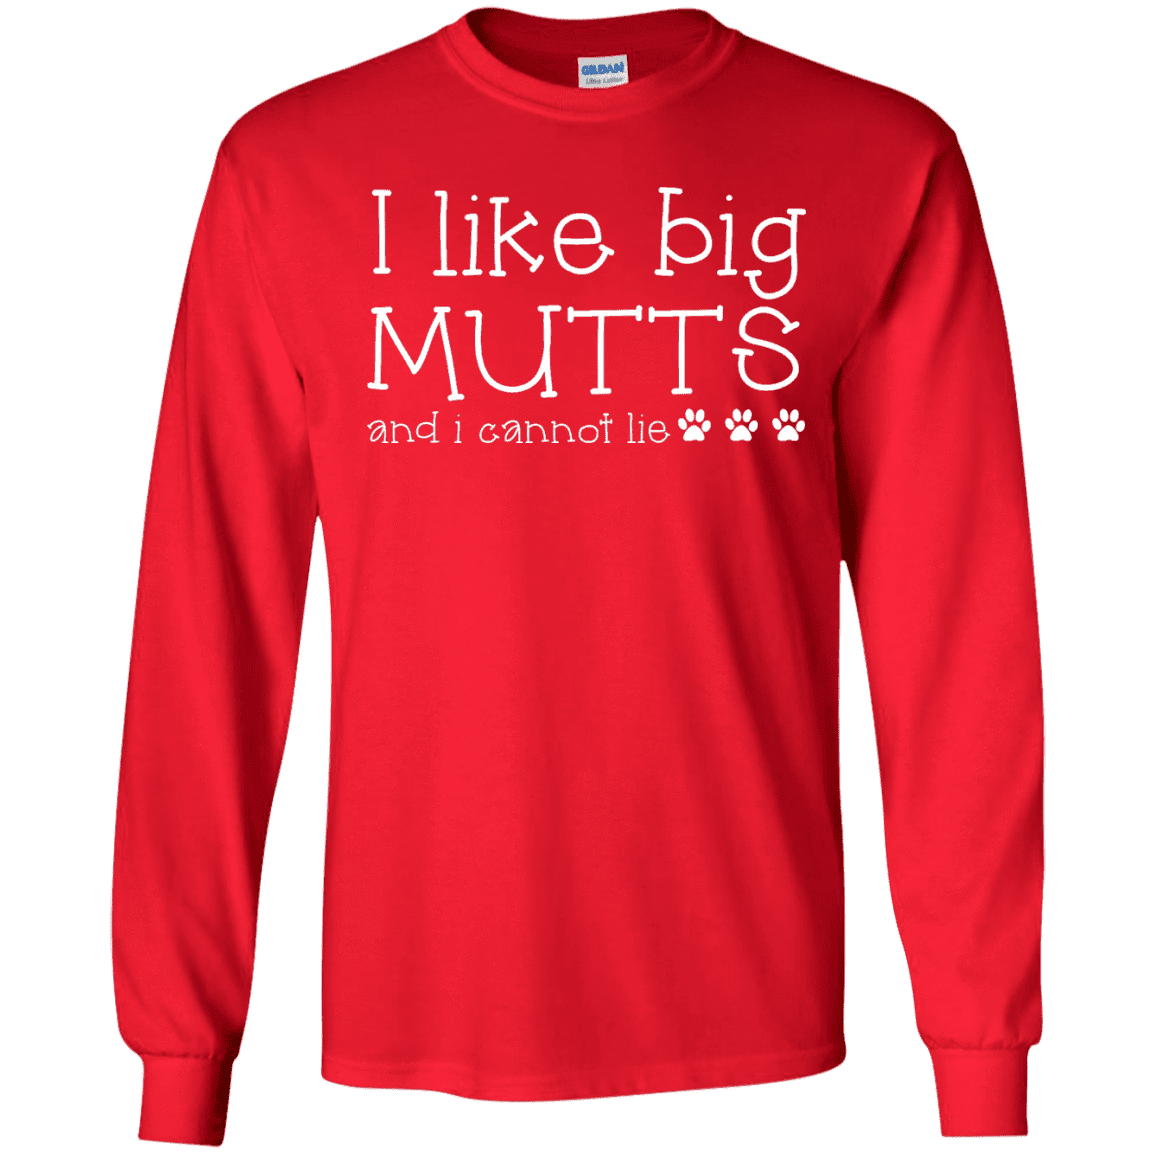 I Like Big Mutts - Long Sleeve T Shirt.